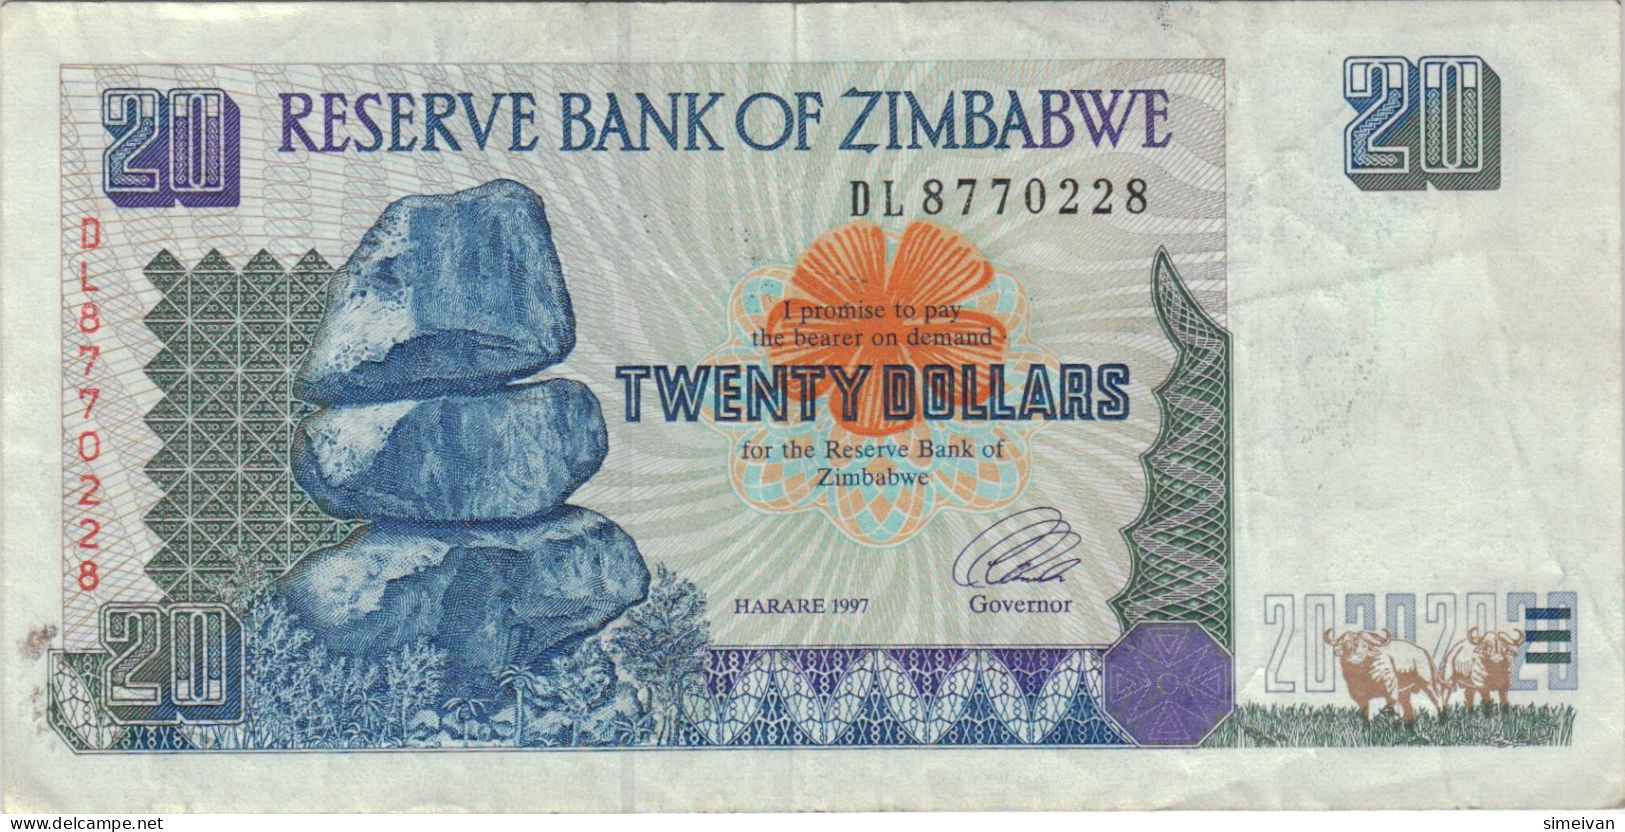 Zimbabwe 20 Dollars 1997 P-7a Banknote Africa Currency #5164 - Zimbabwe